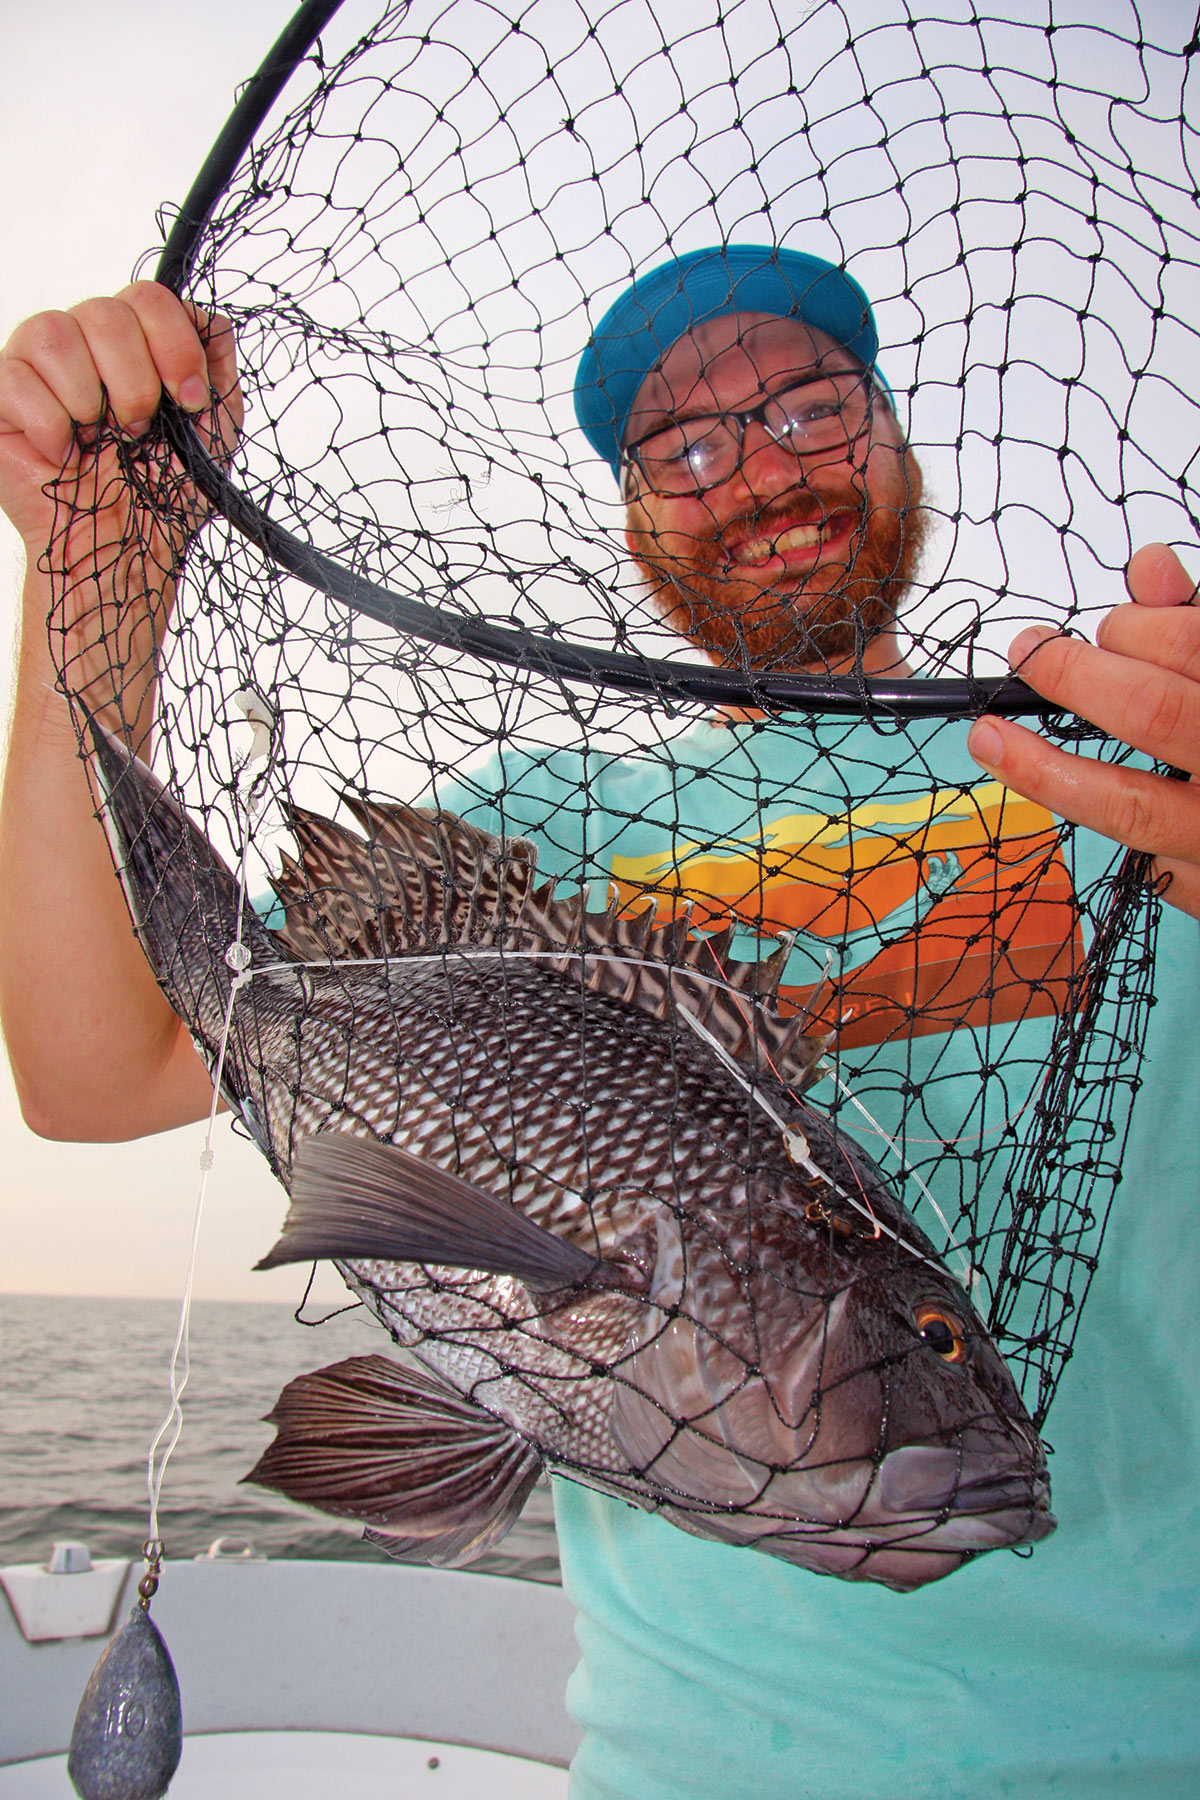 Drag net fishing, Catching of fish using drag net